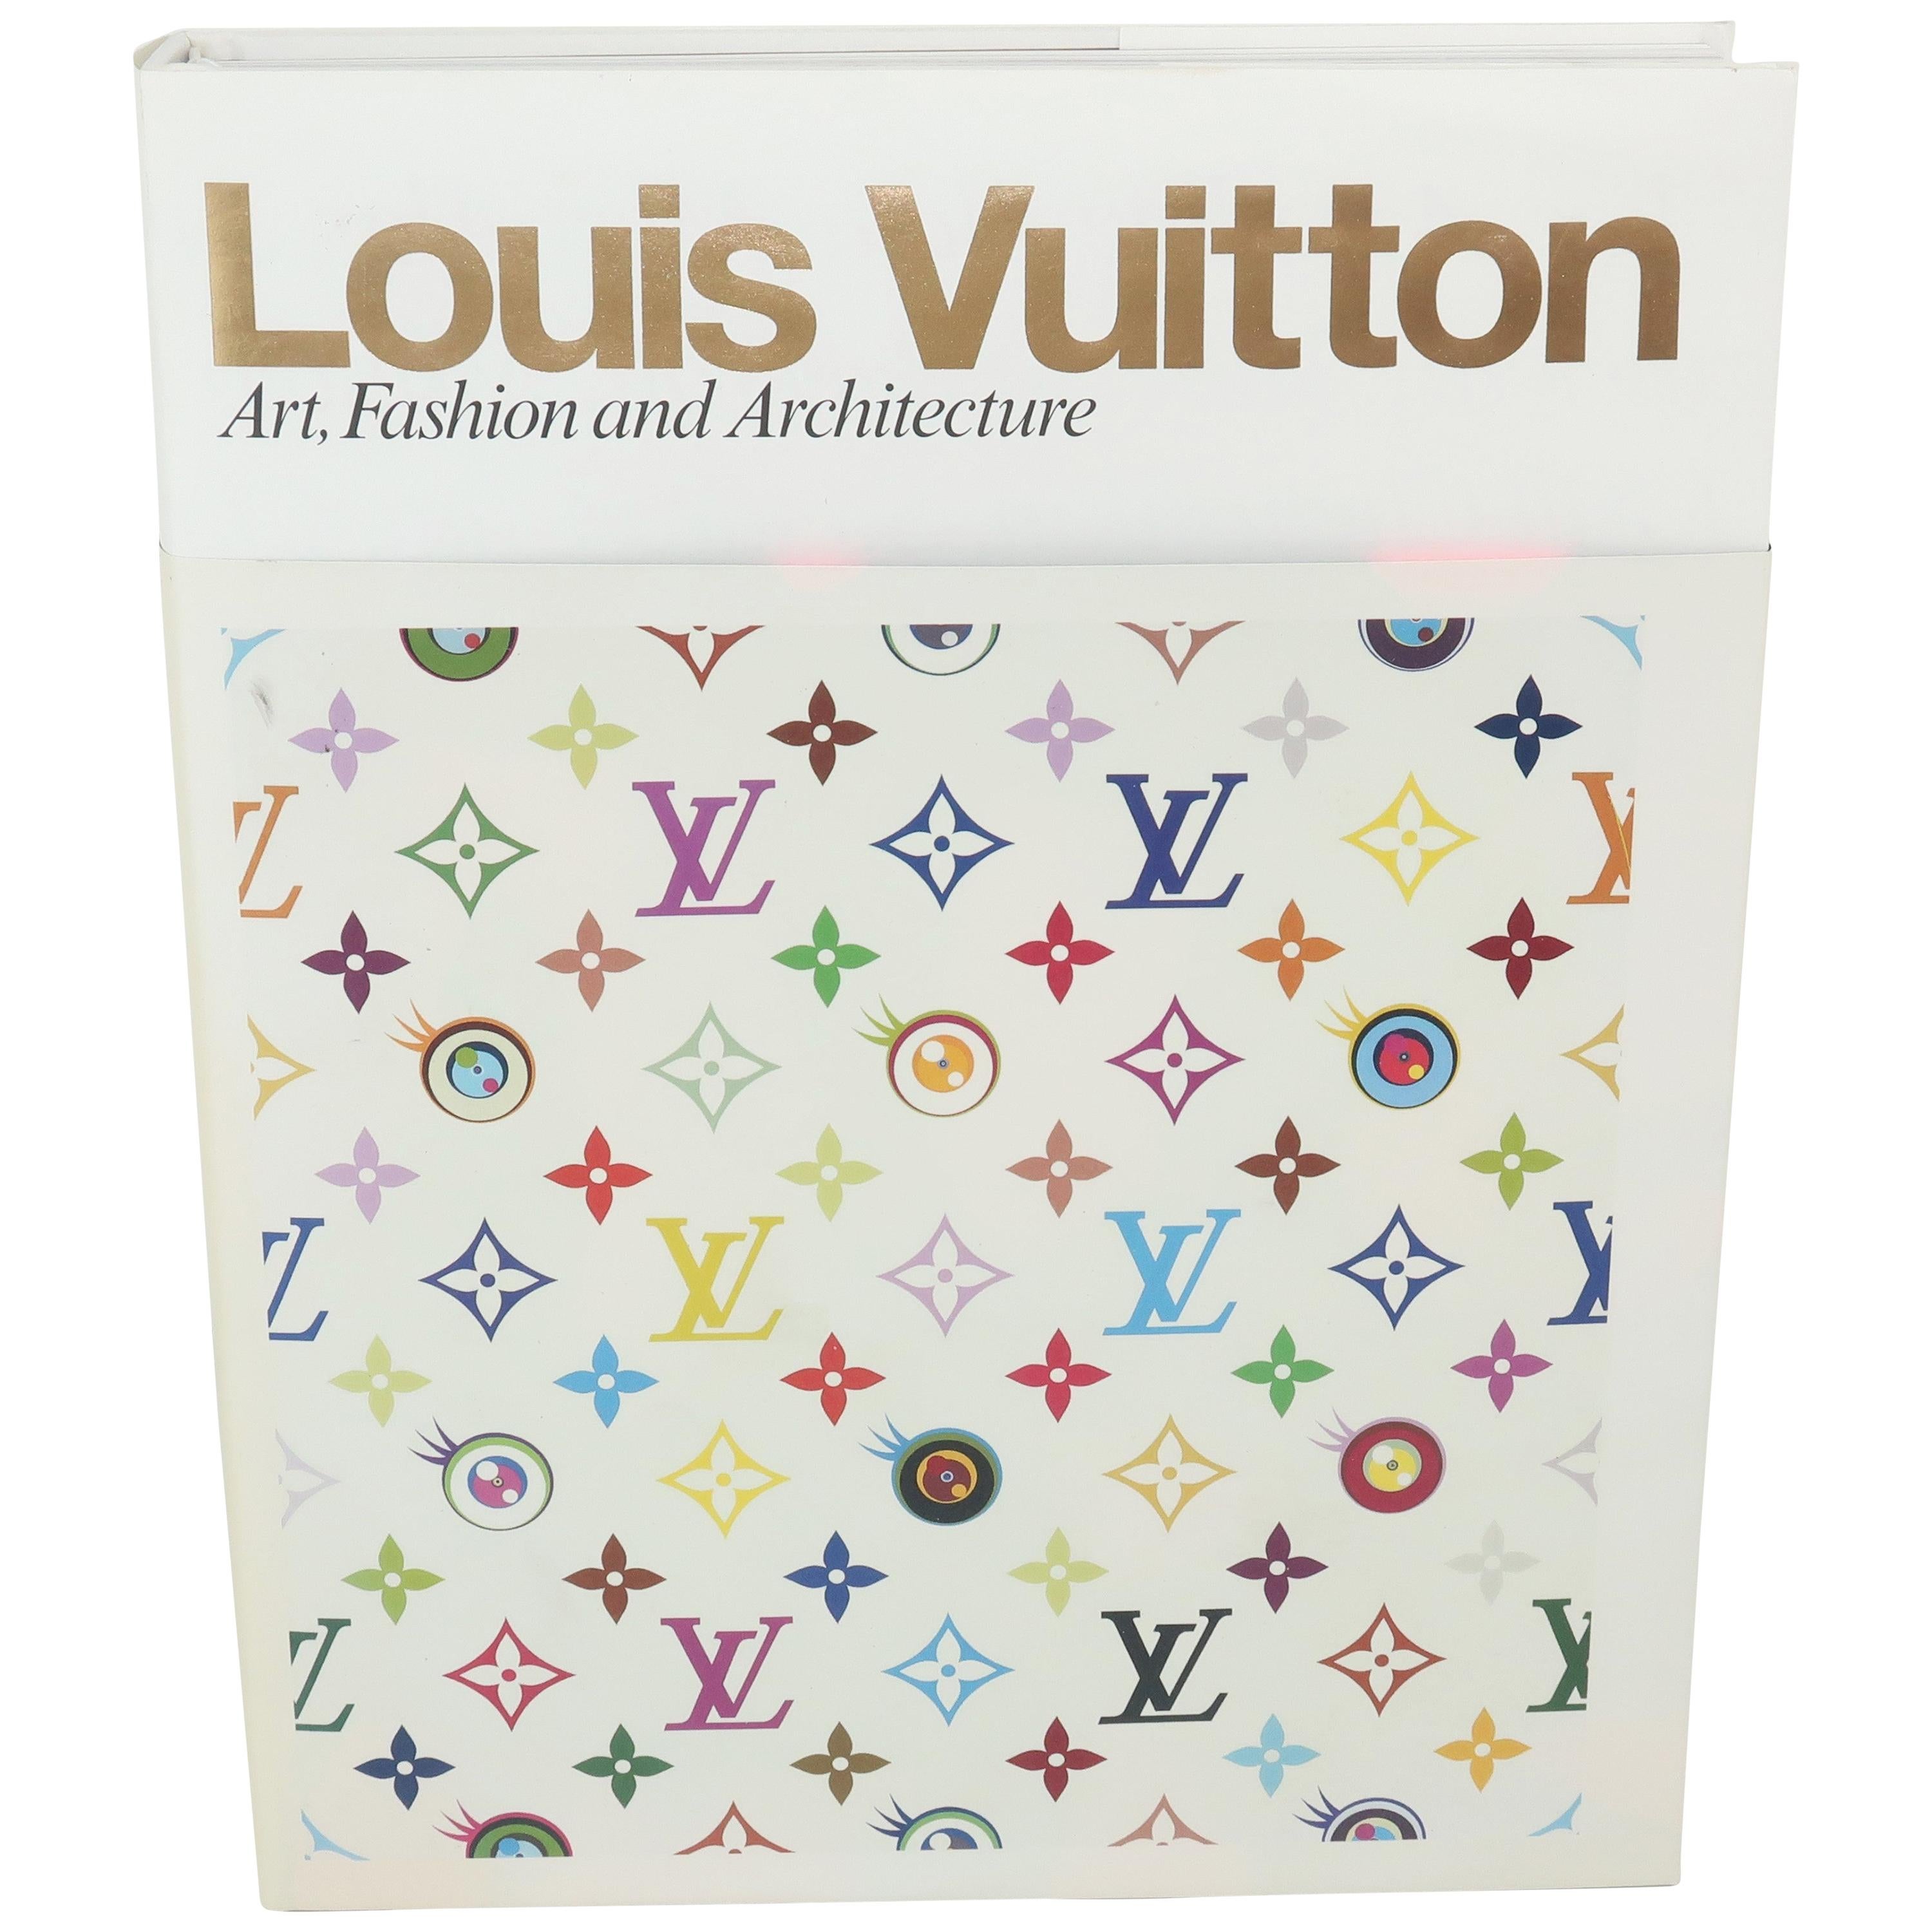 Louis Vuitton Takashi Murakami Art Fashion and Architecture 9780847849673